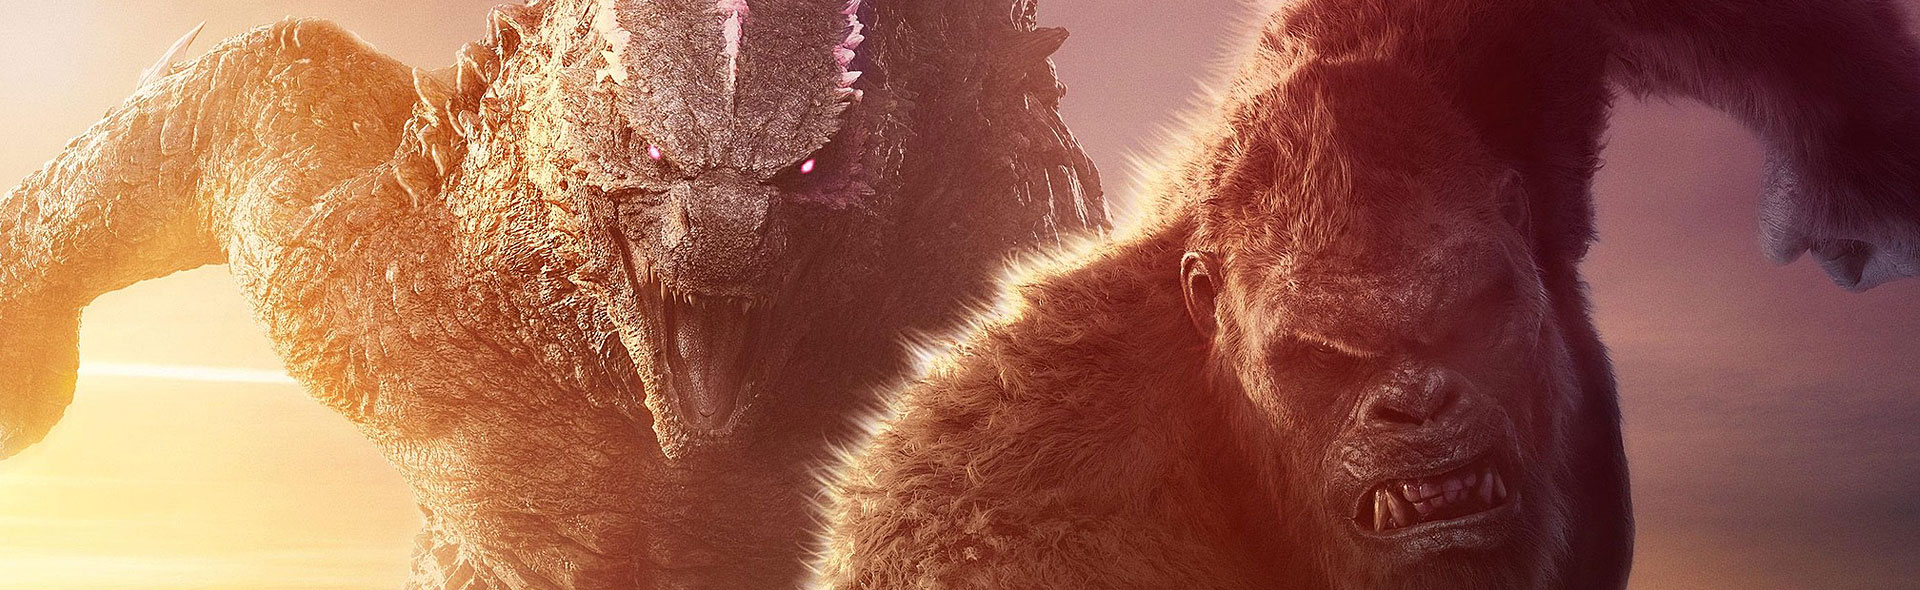 Godzilla X Kong: The new empire_slide_poster